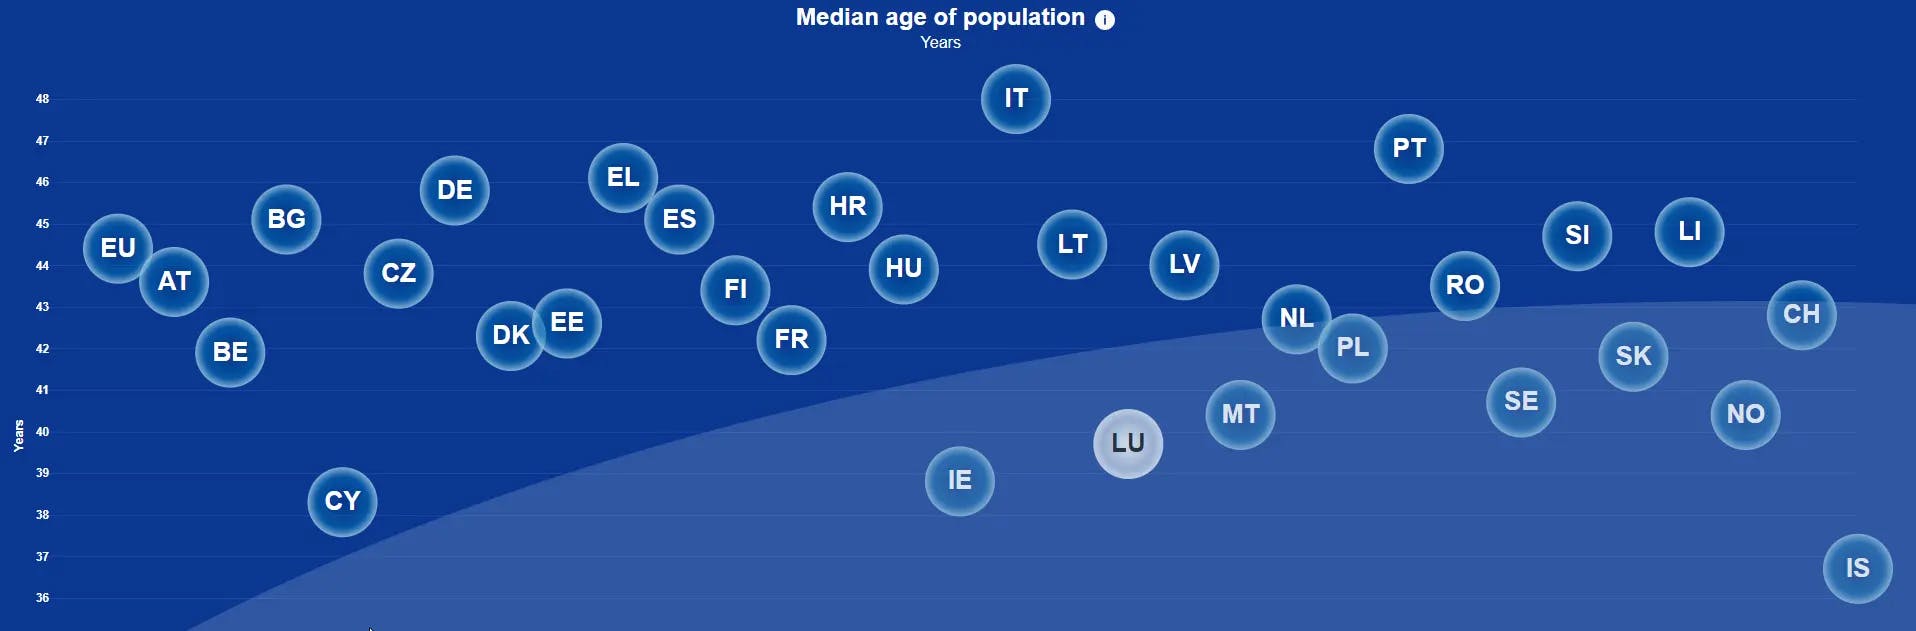 Median age of the EU population